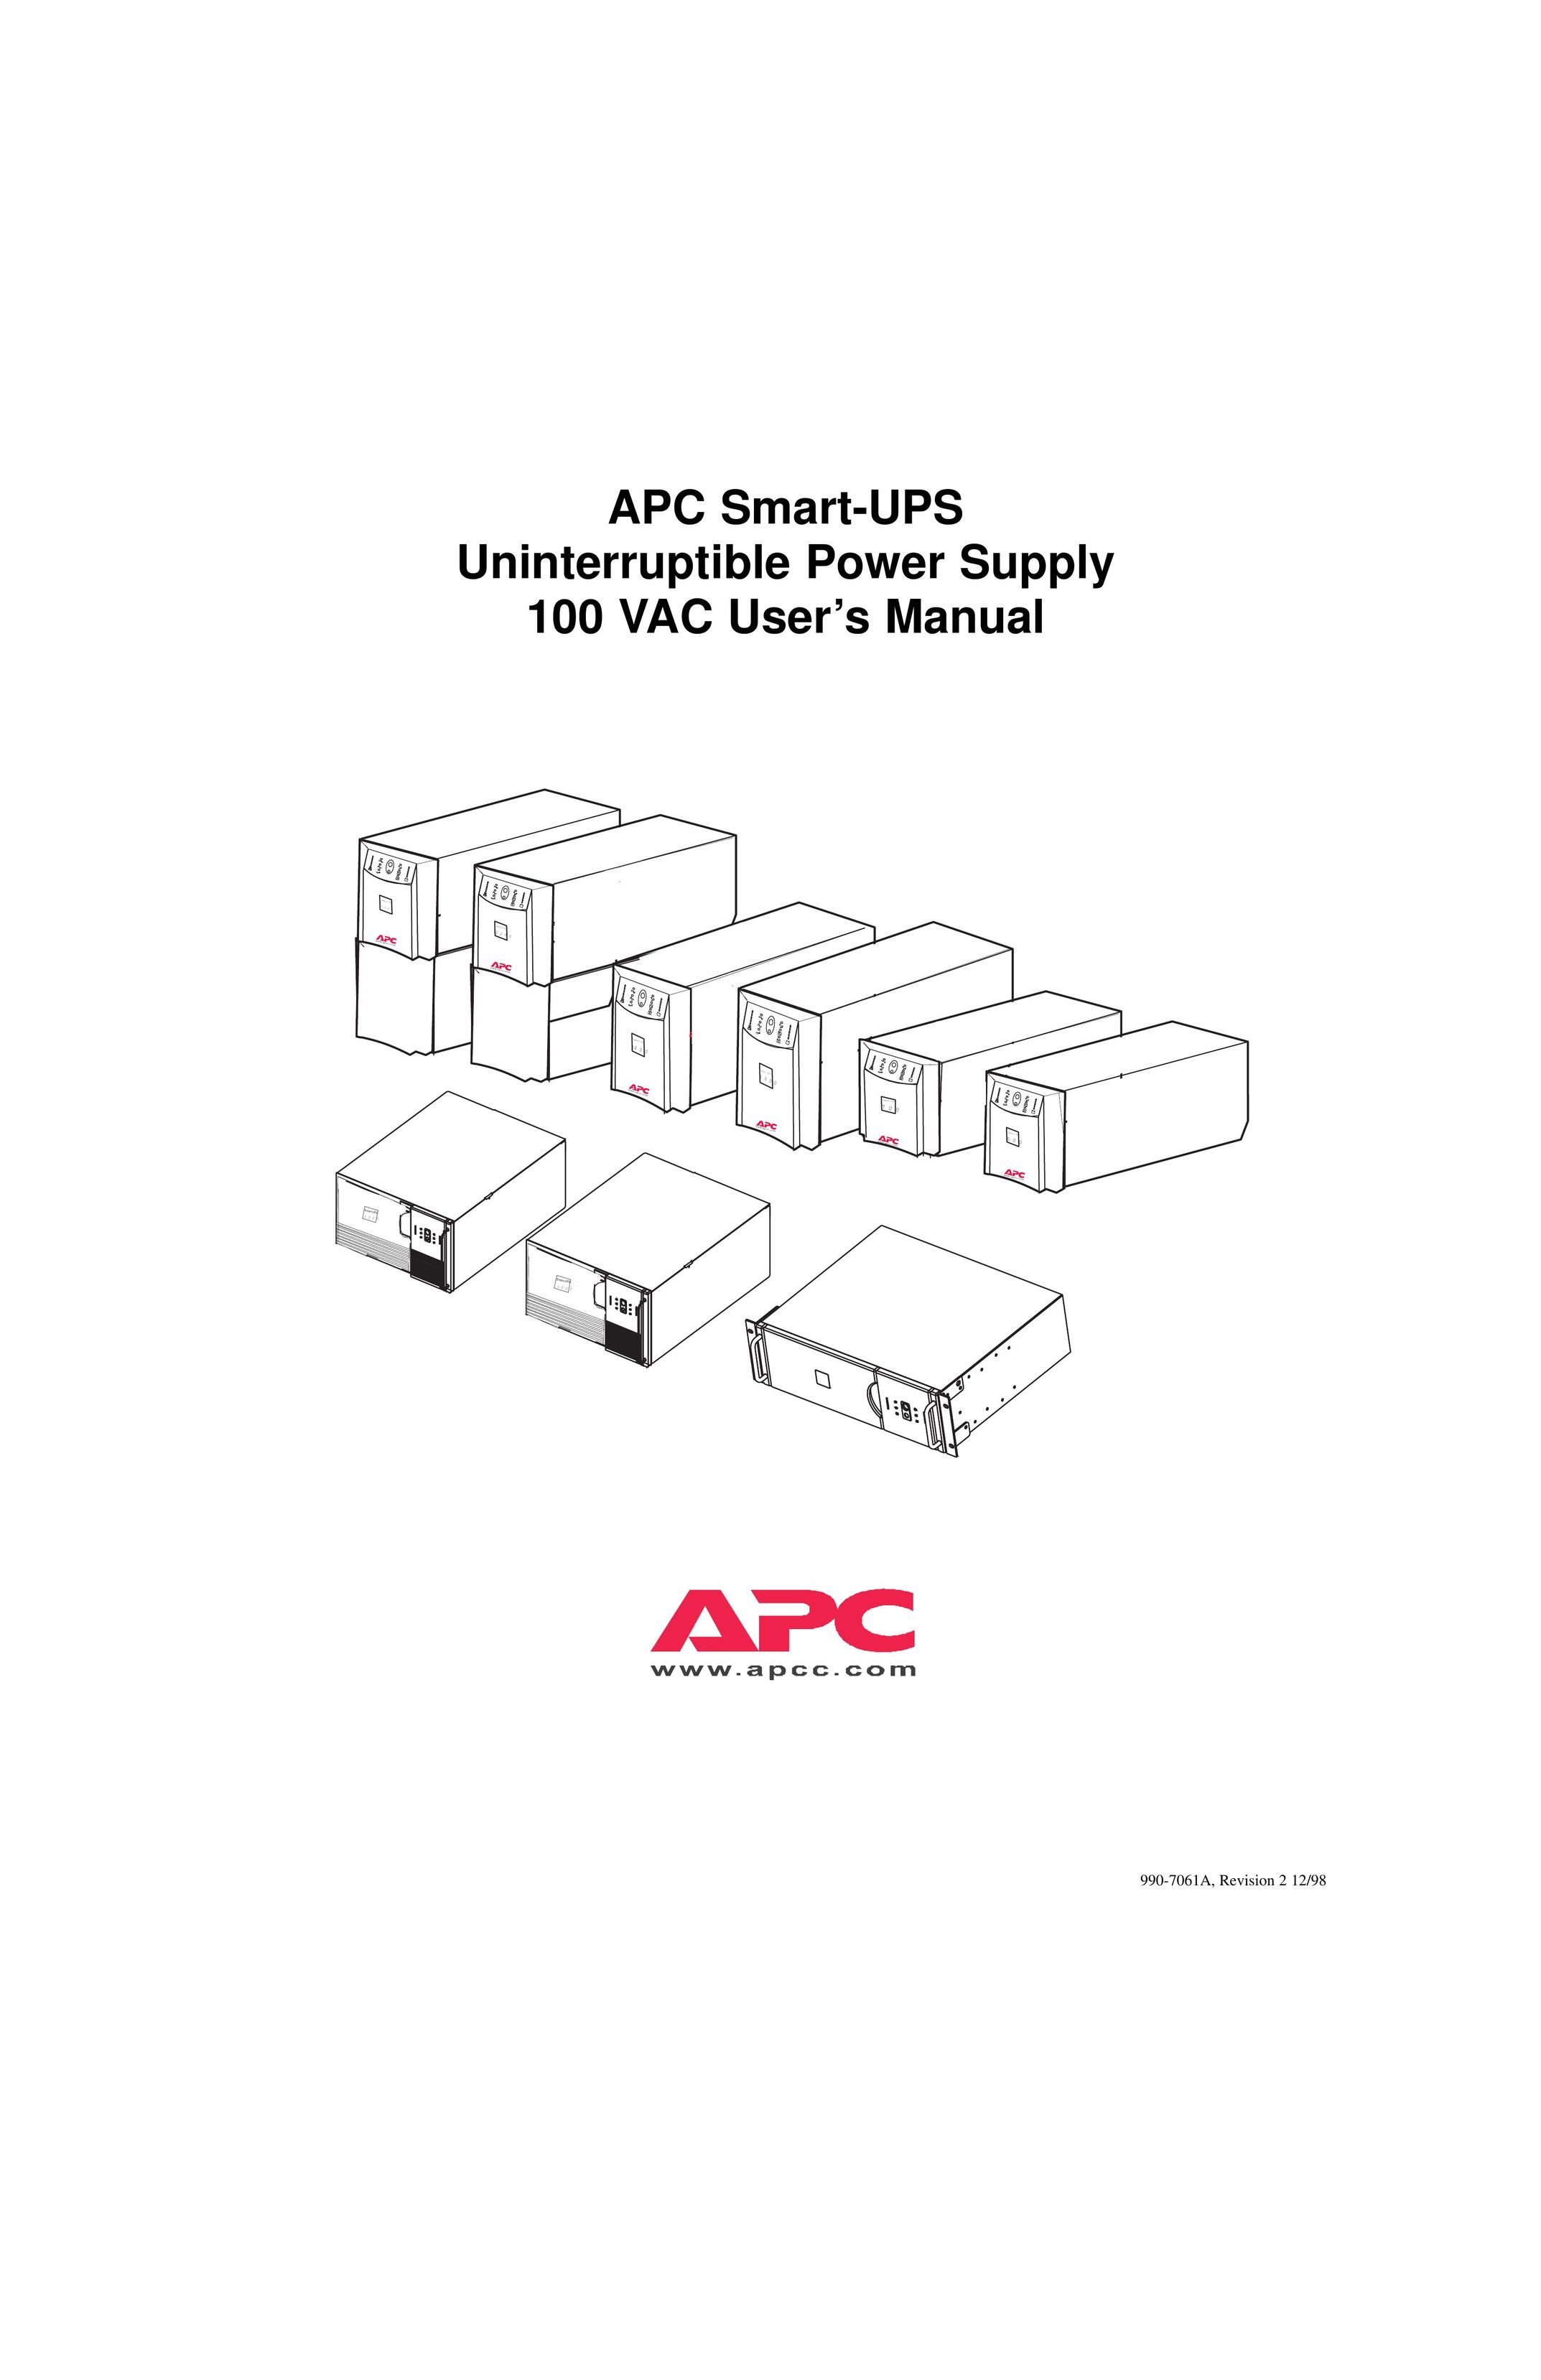 American Power Conversion 100 VAC Power Supply User Manual